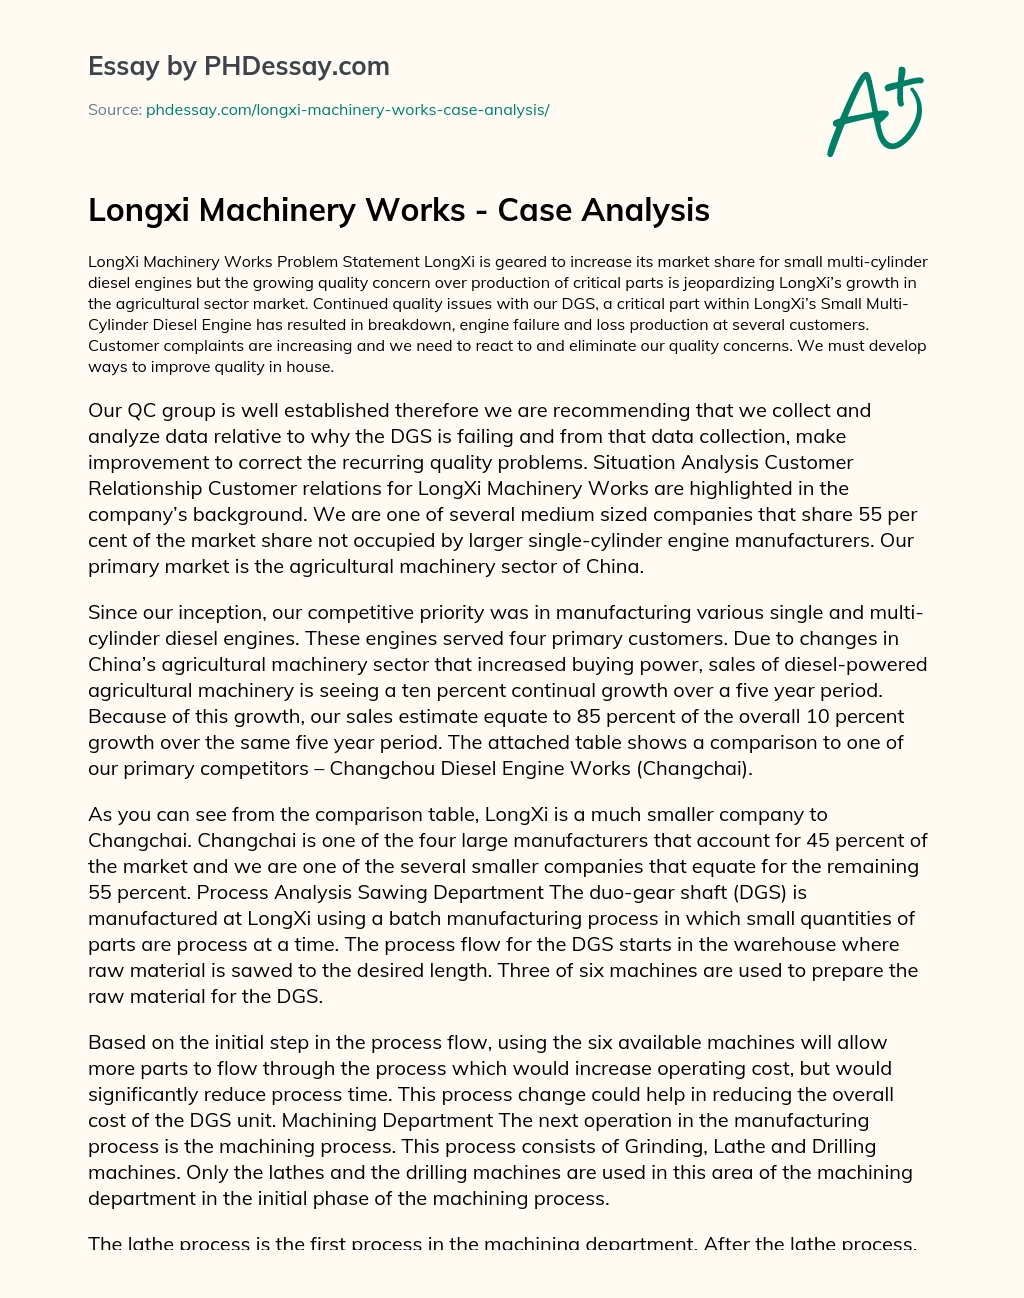 Longxi Machinery Works – Case Analysis essay